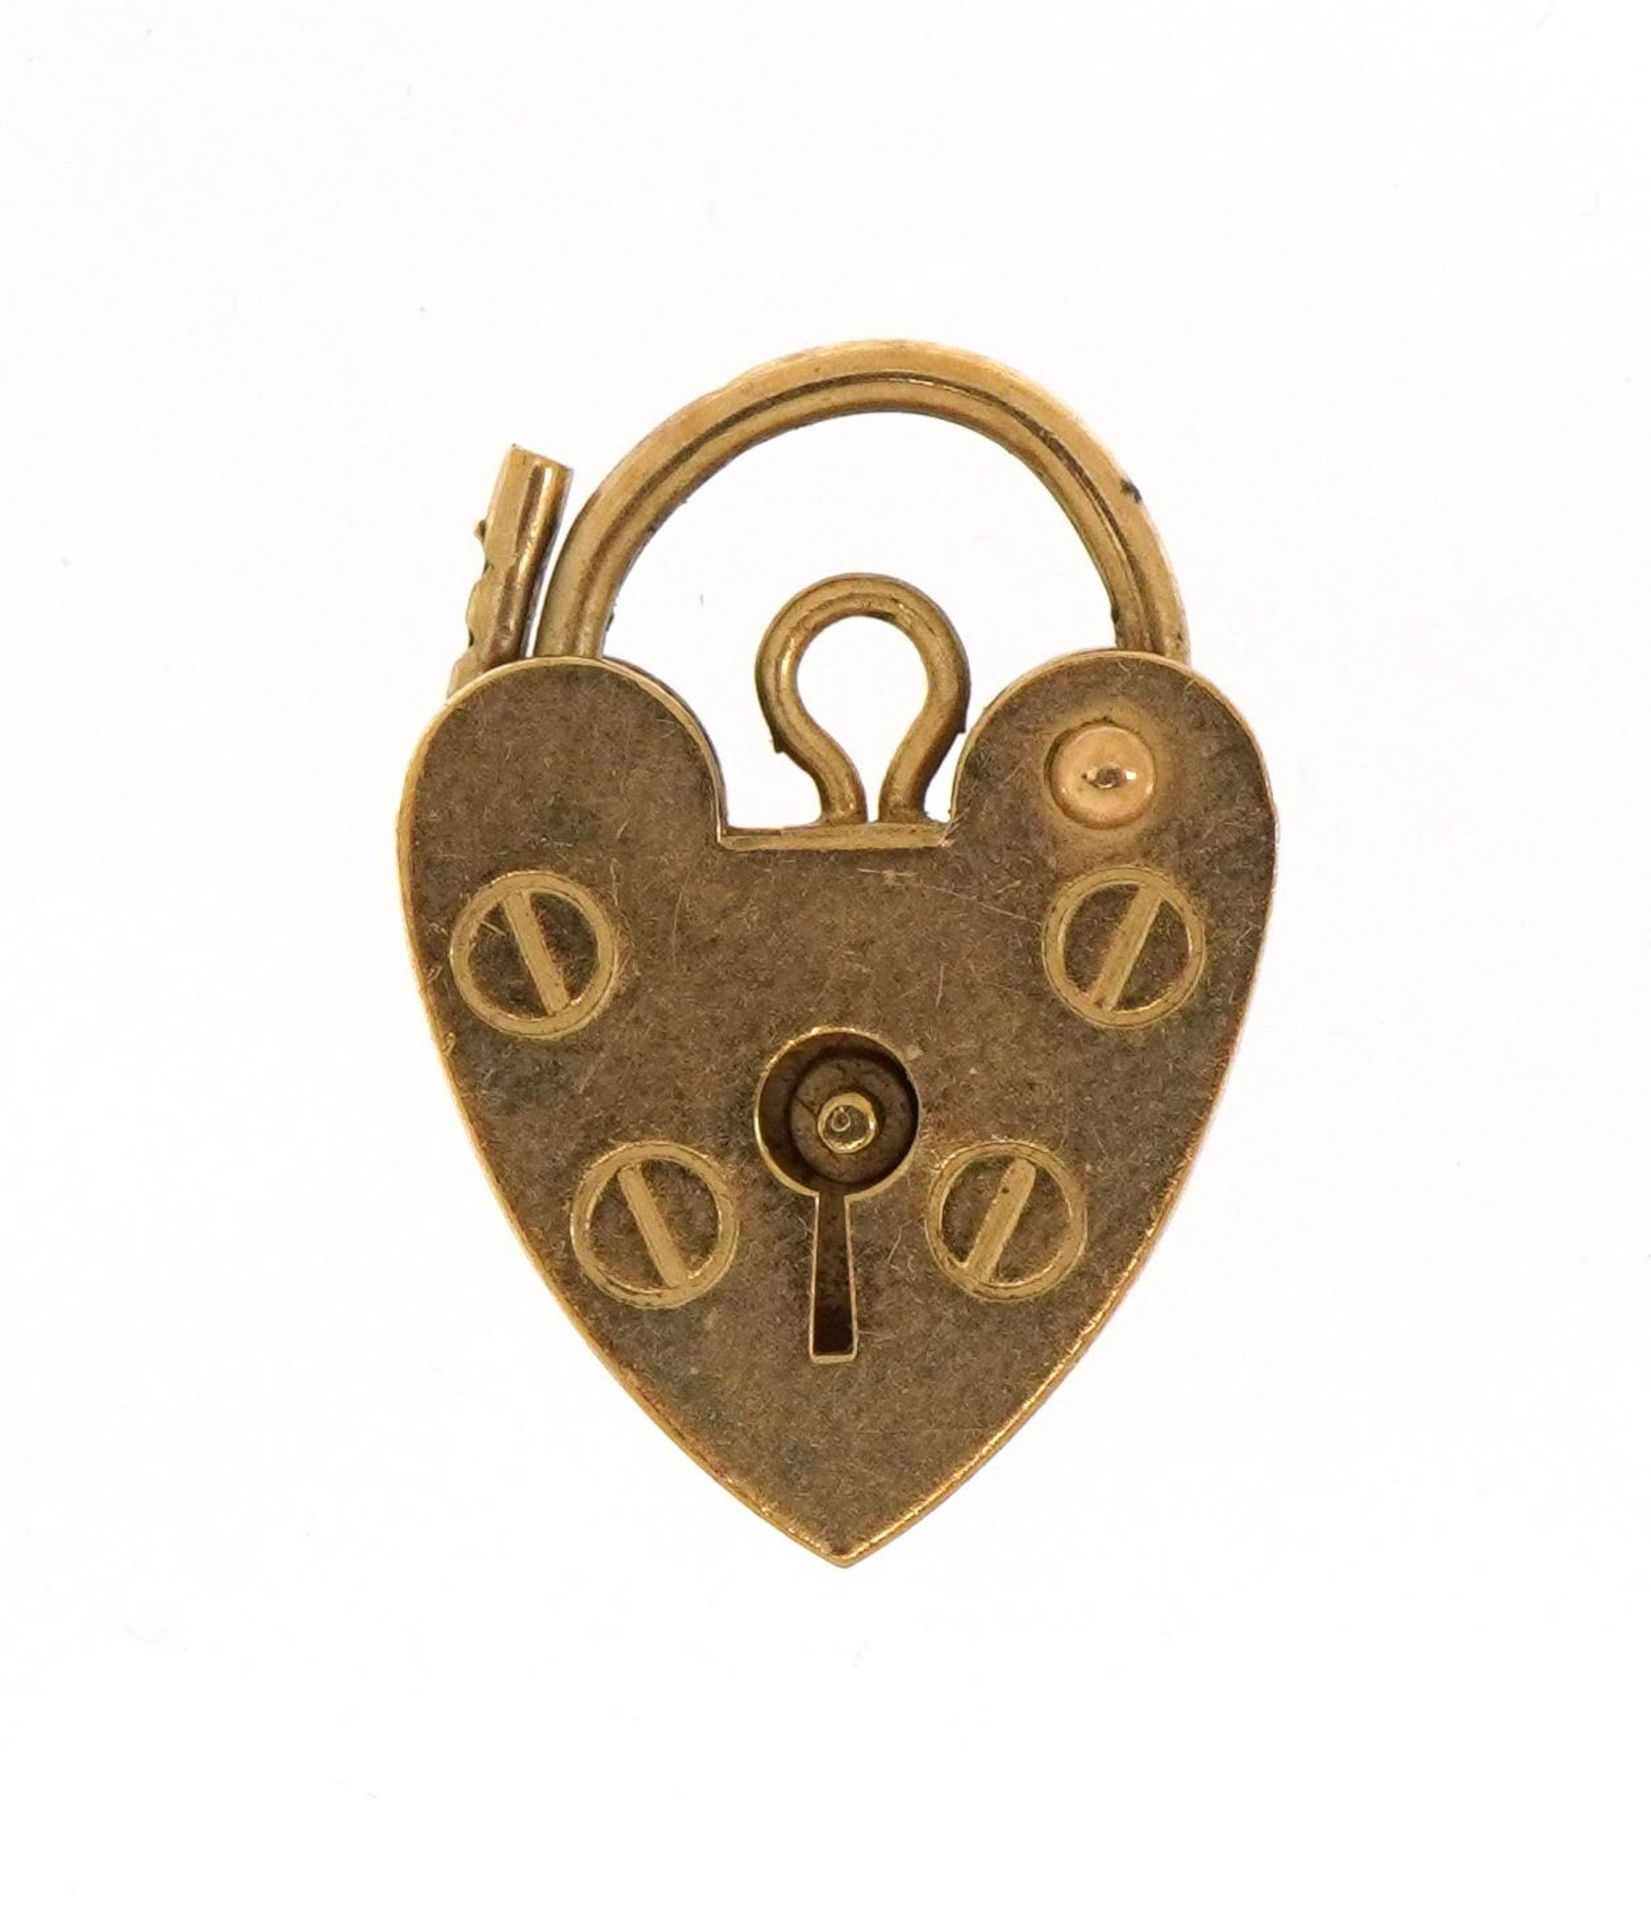 9ct gold love heart padlock, 1.8cm high, 1.6g